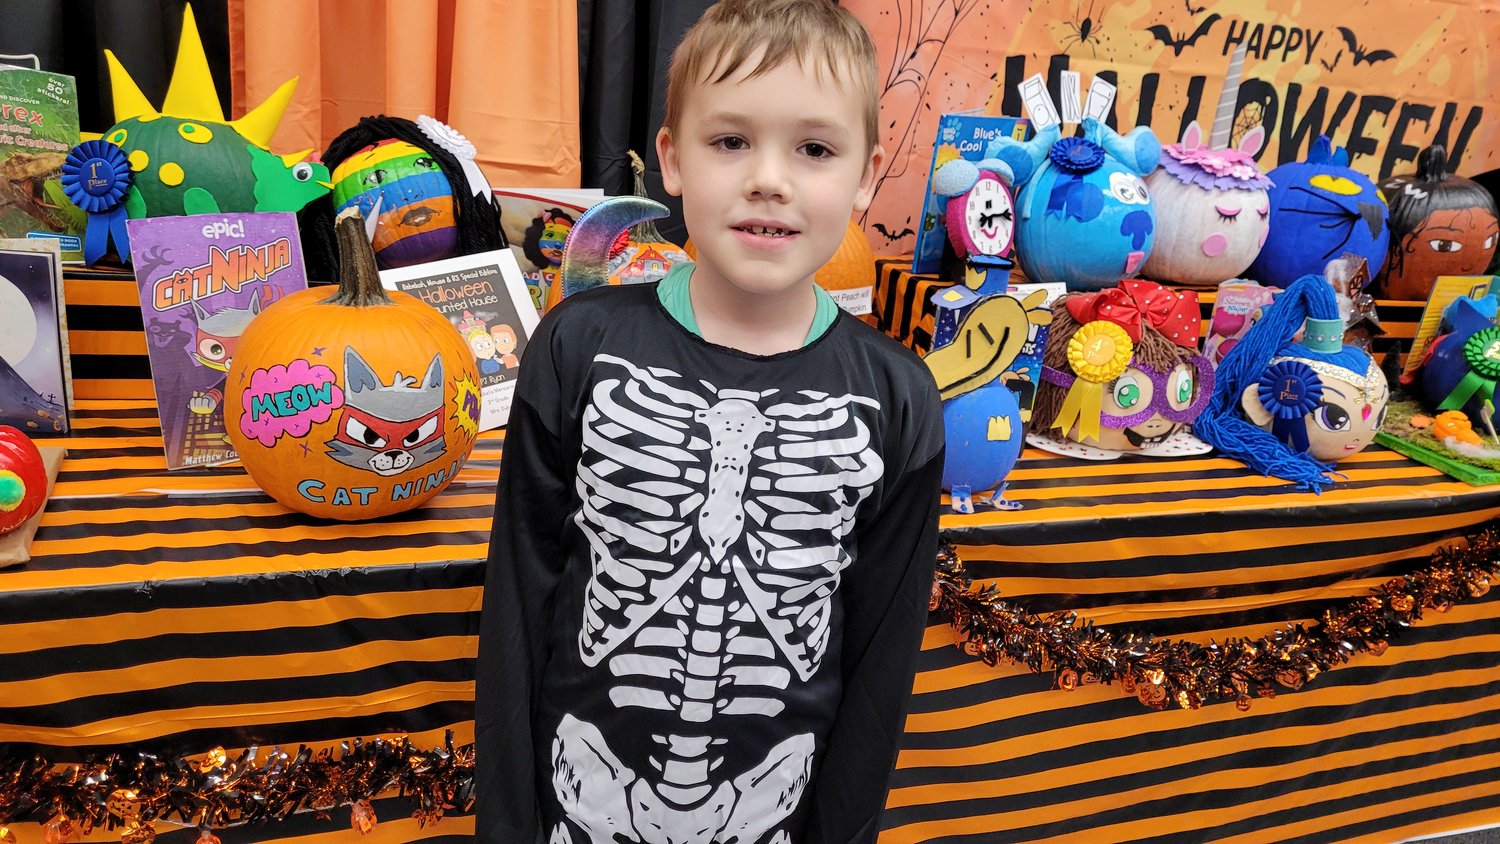 Fourth grader, Liam, was around to show off his pumpkin, Cat Ninja.